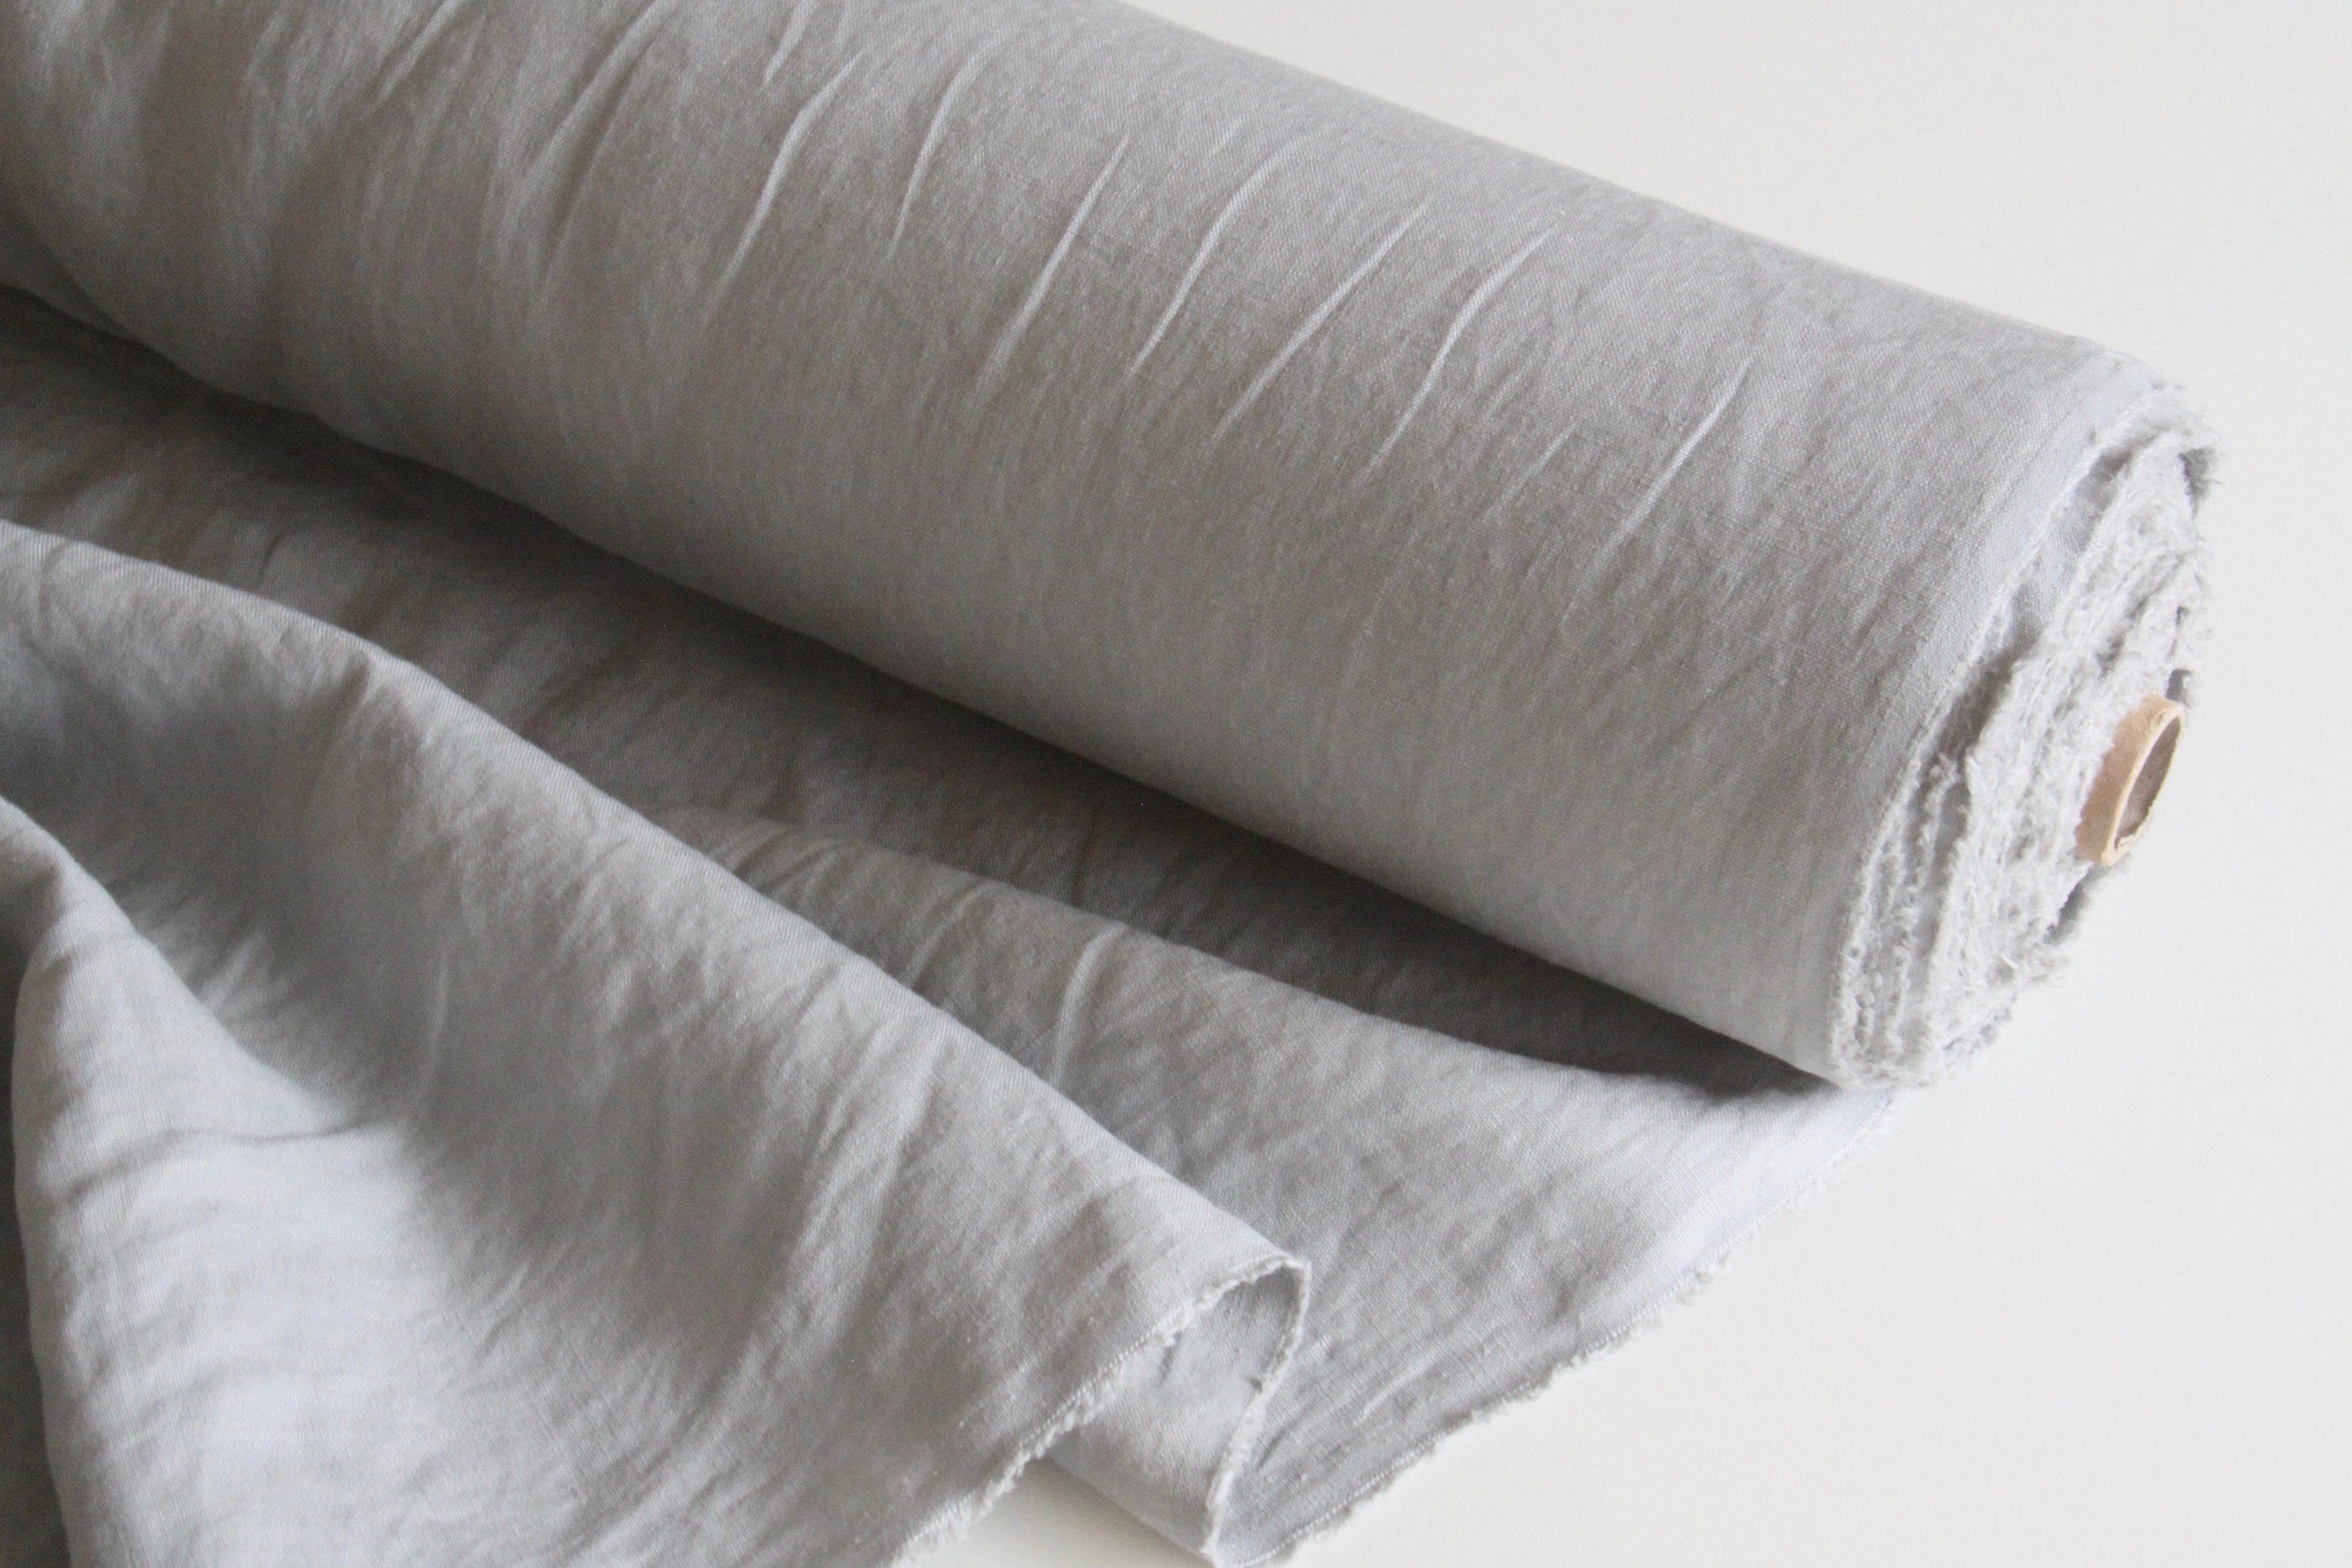 Medium /heavy Weight Dark Grey LINEN Blend Fabric by the Yard, Drapery ,  Upholstery, Home Décor Fabric 